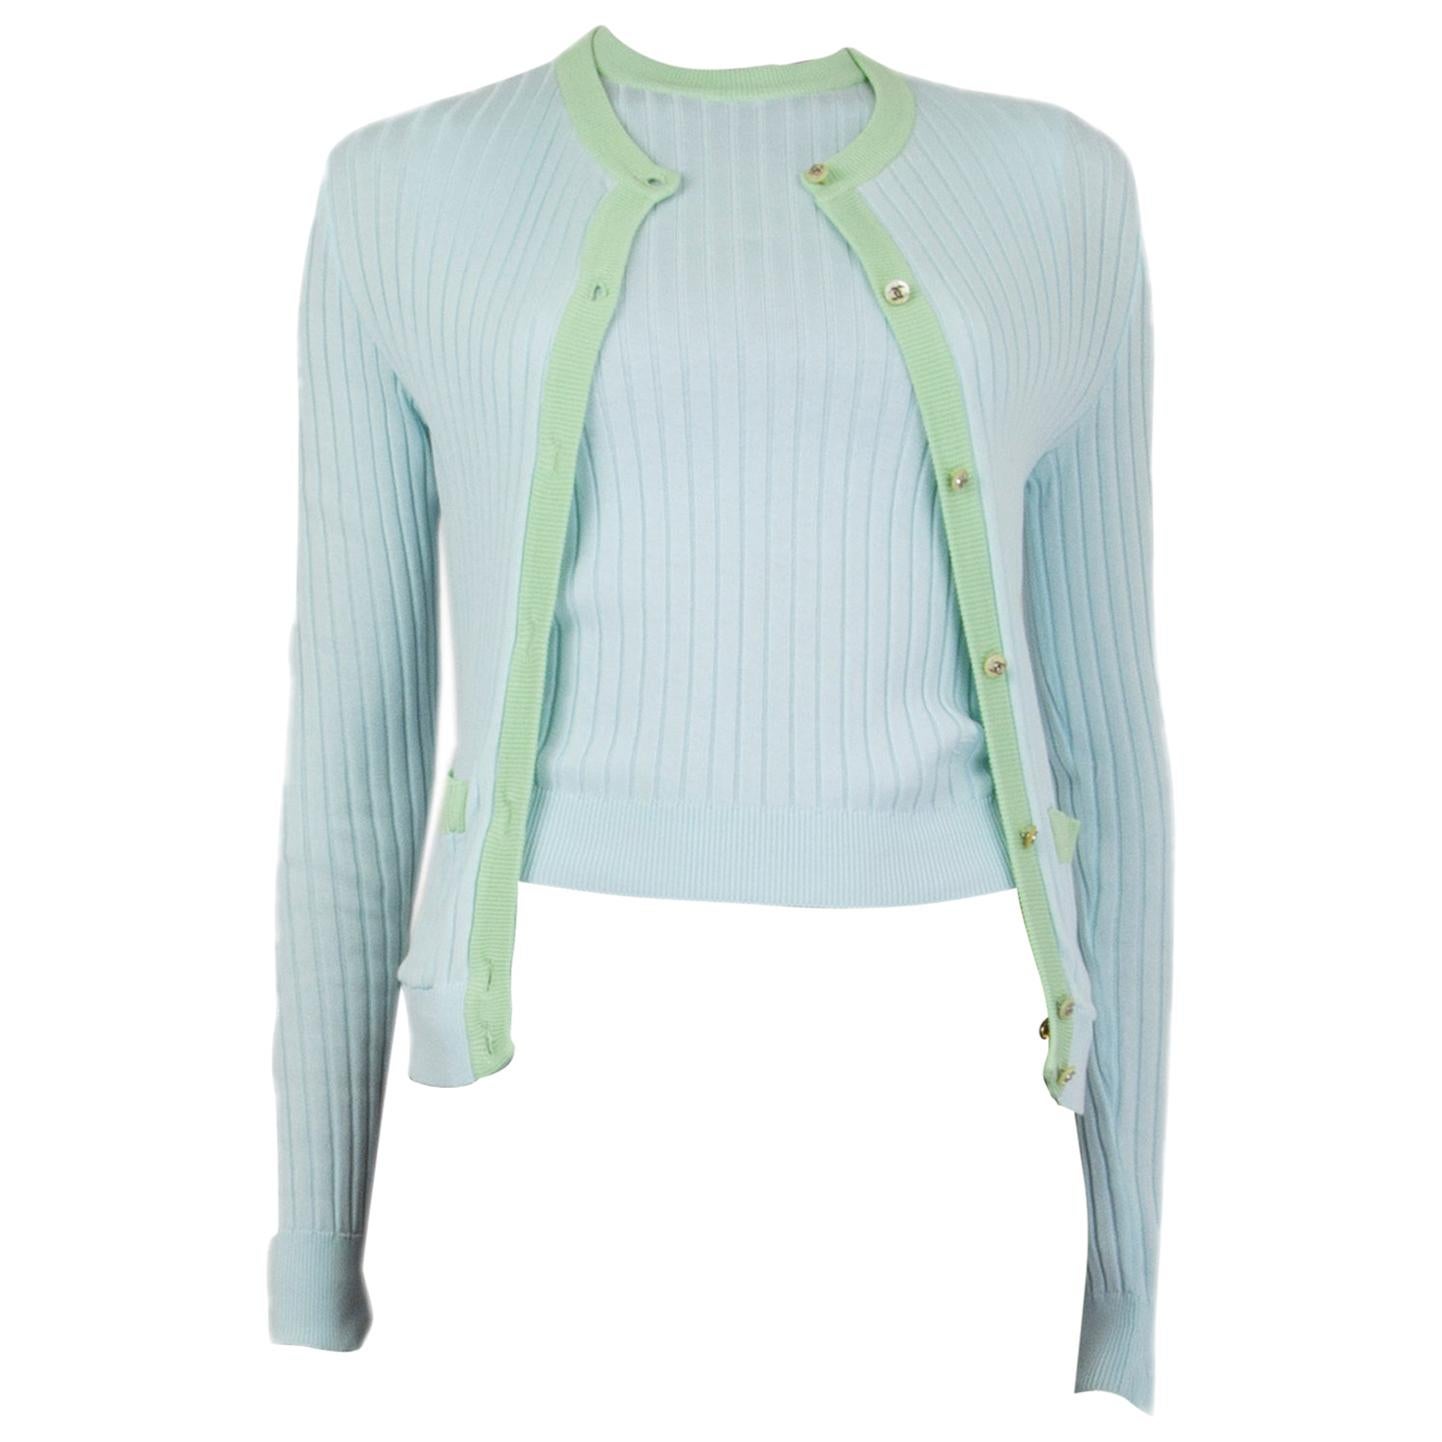 CHANE blue & green cotton Twinset Sweater 36 XS